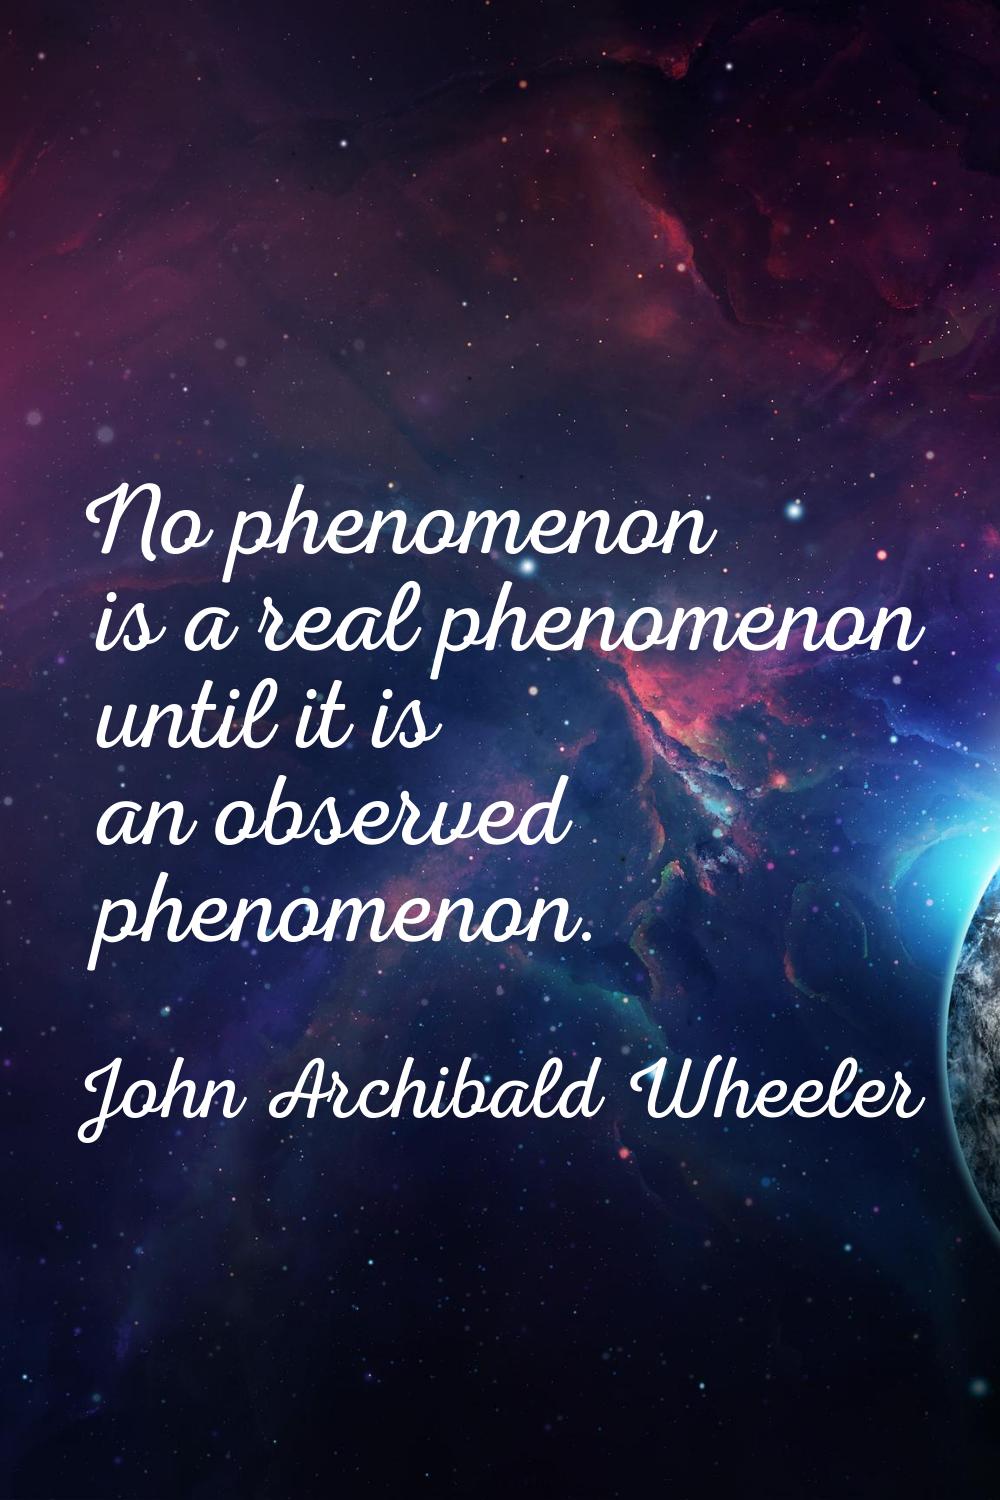 No phenomenon is a real phenomenon until it is an observed phenomenon.